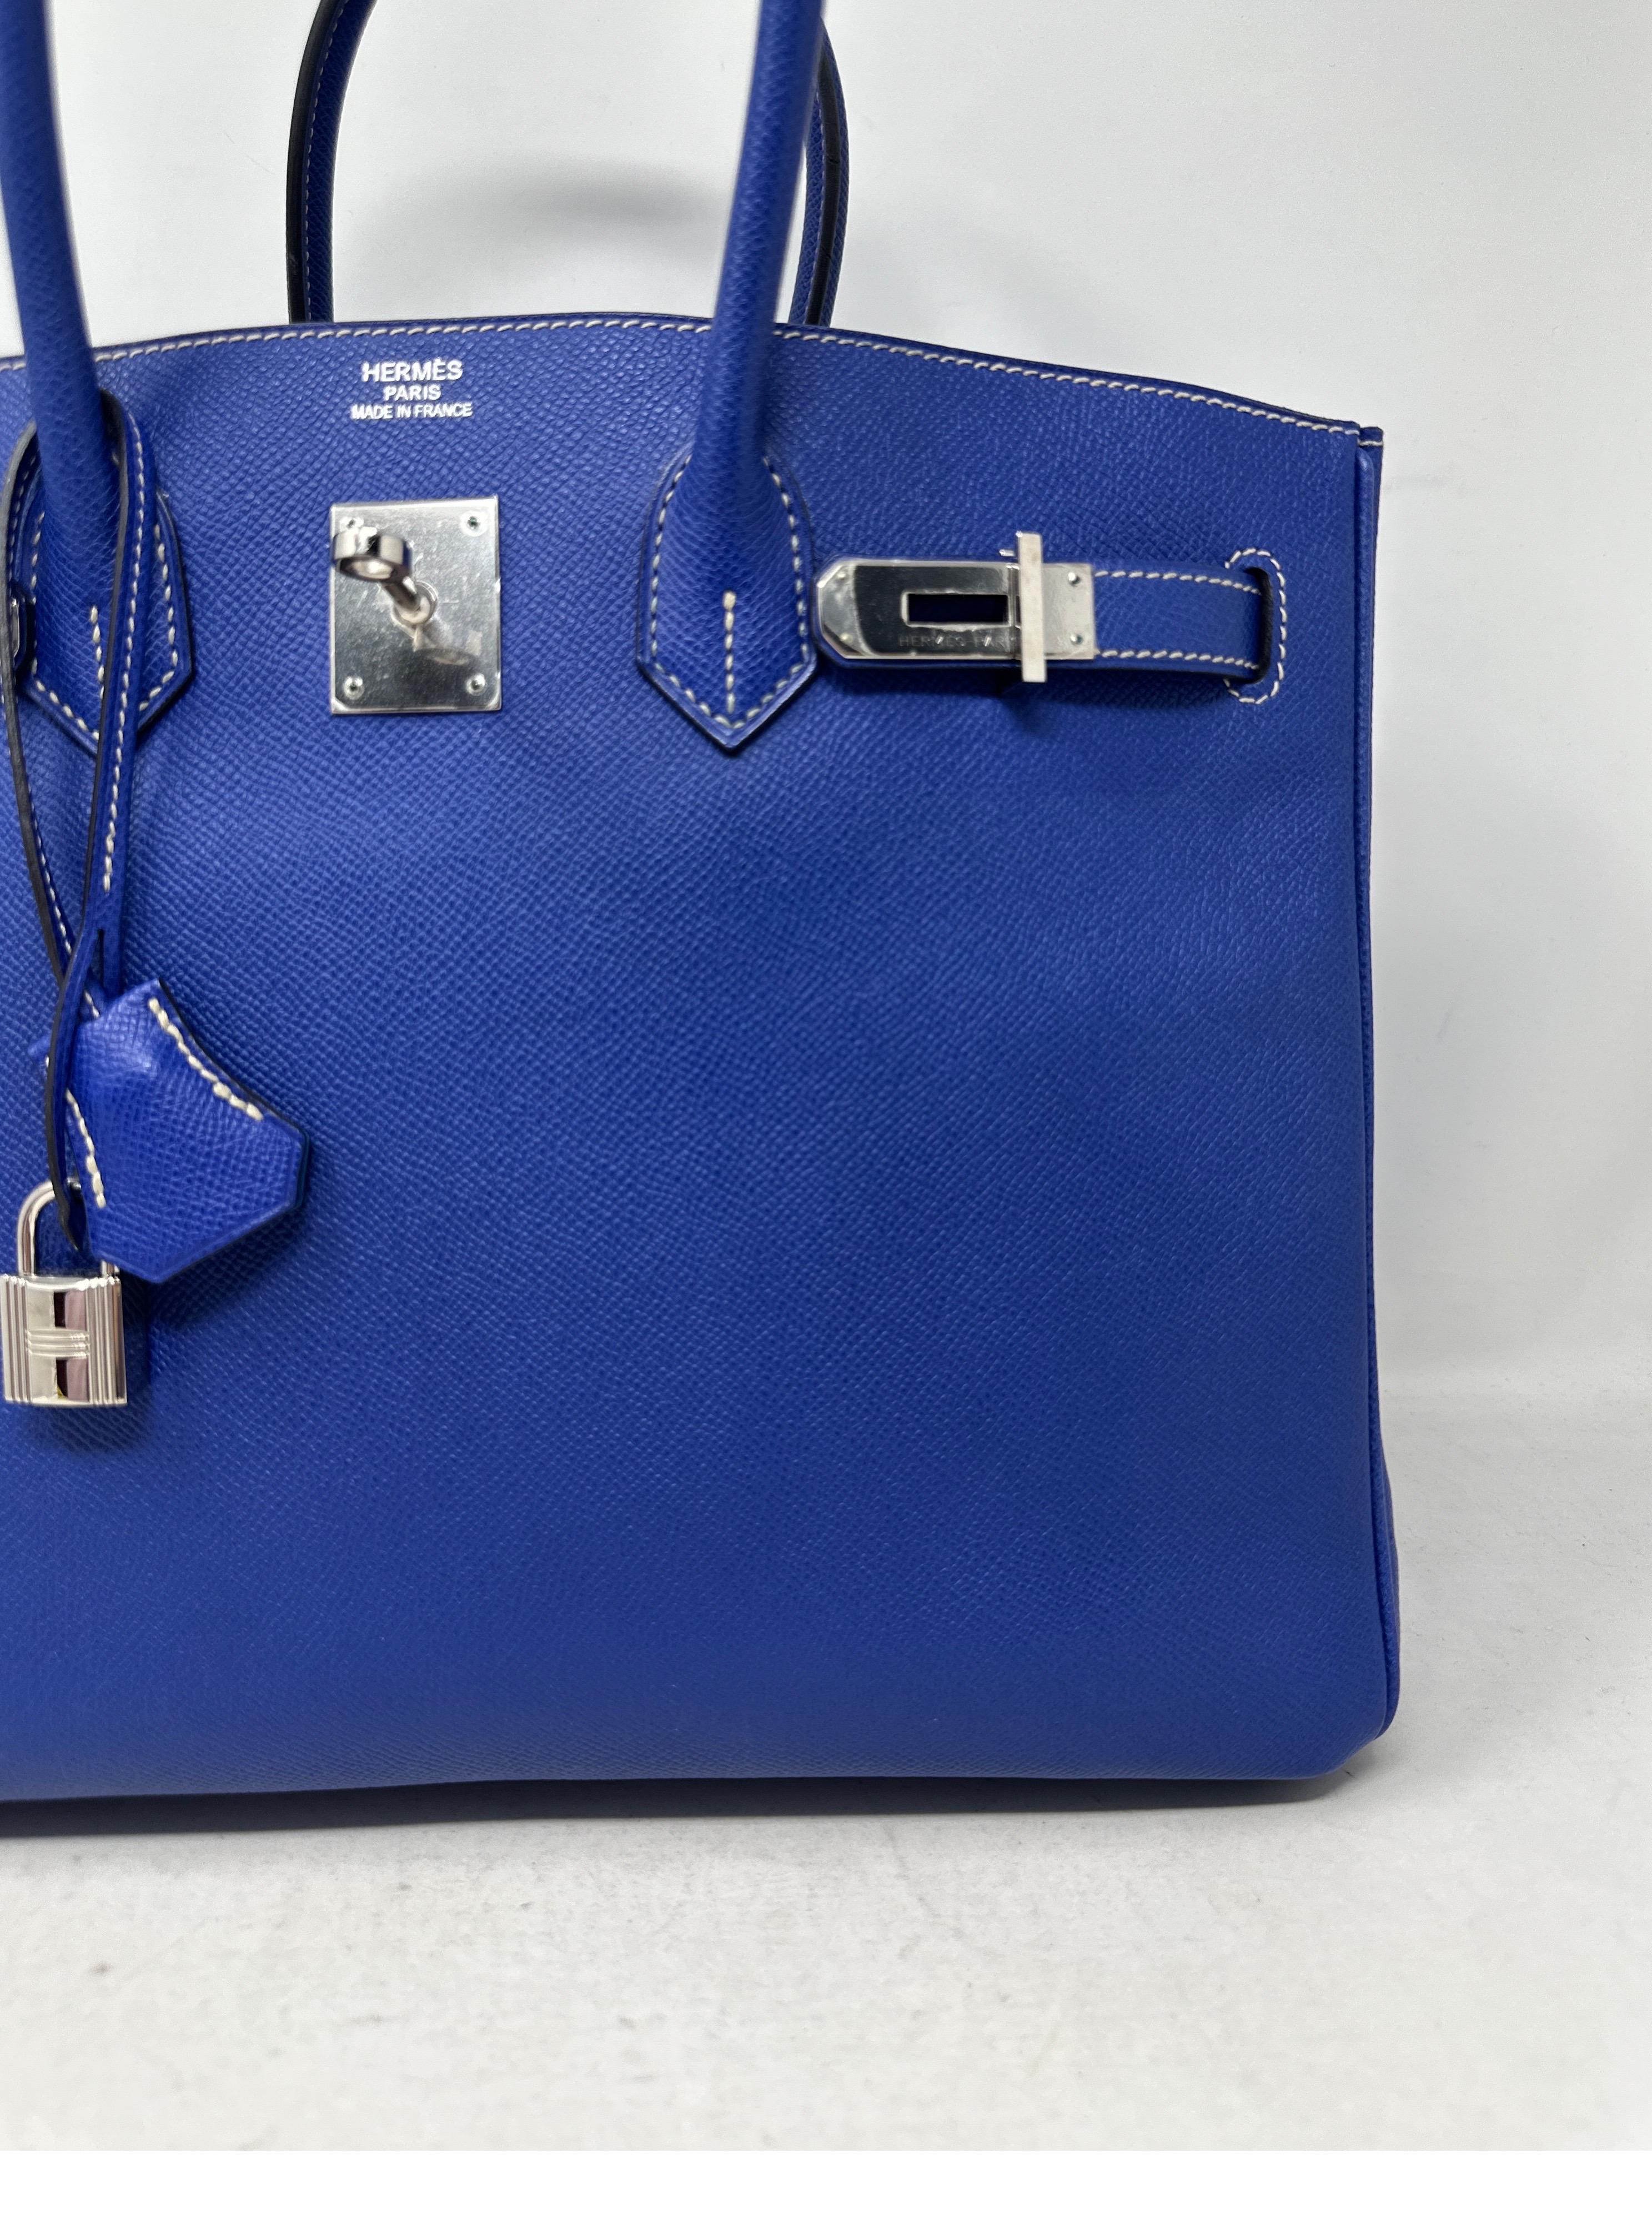 Women's or Men's Hermes Blue Electrique Birkin 35 Bag 